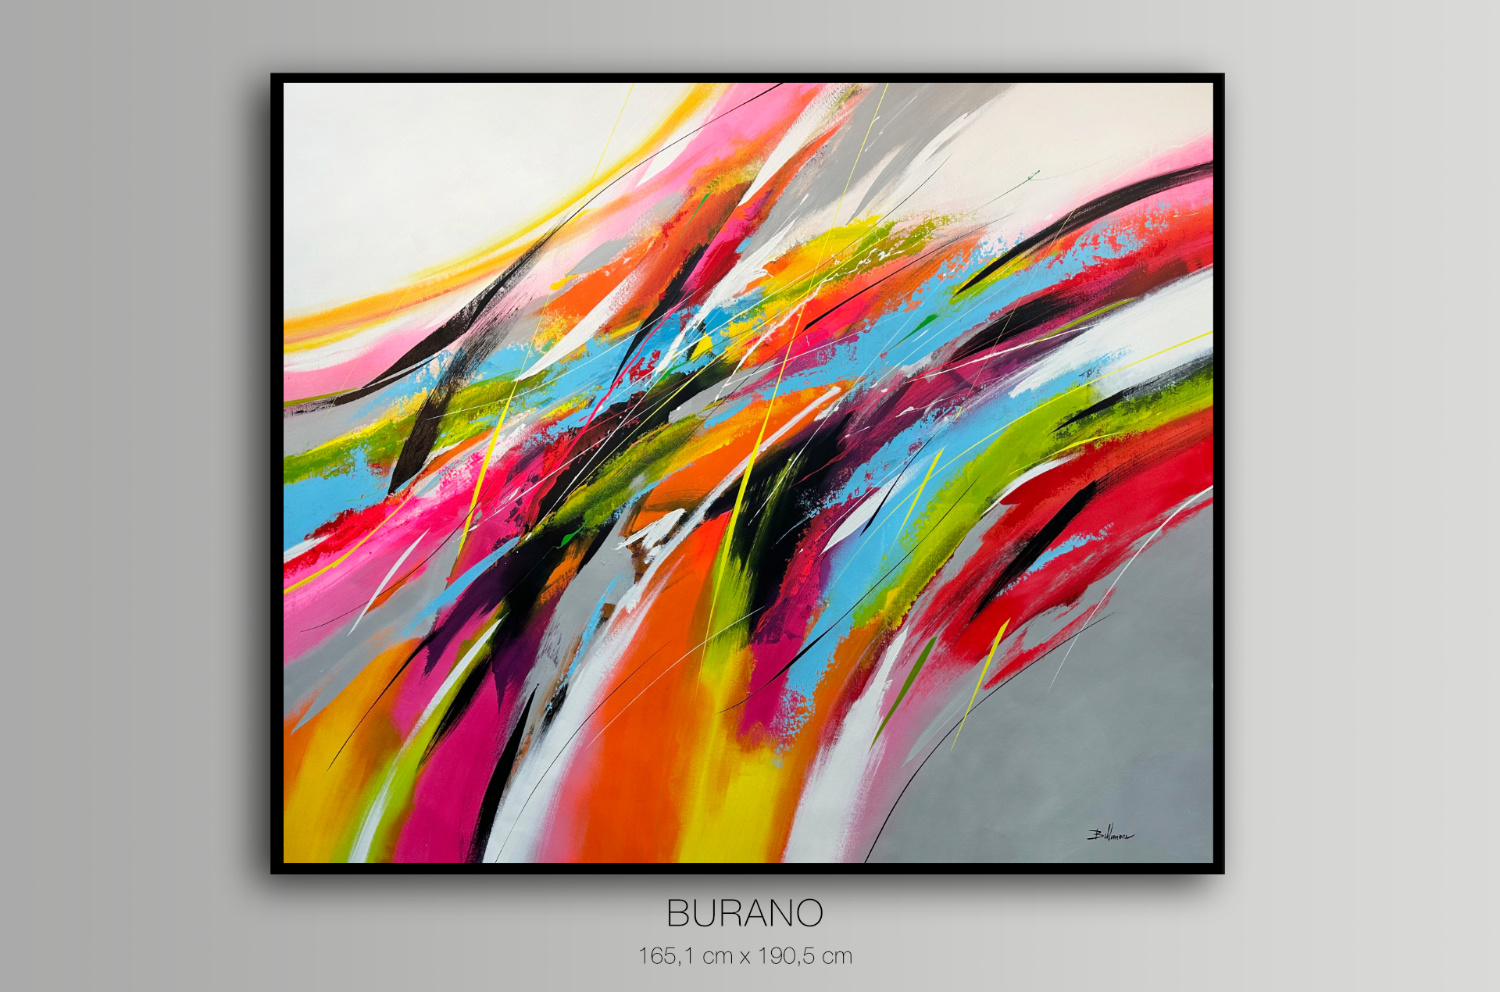 Burano - Featured